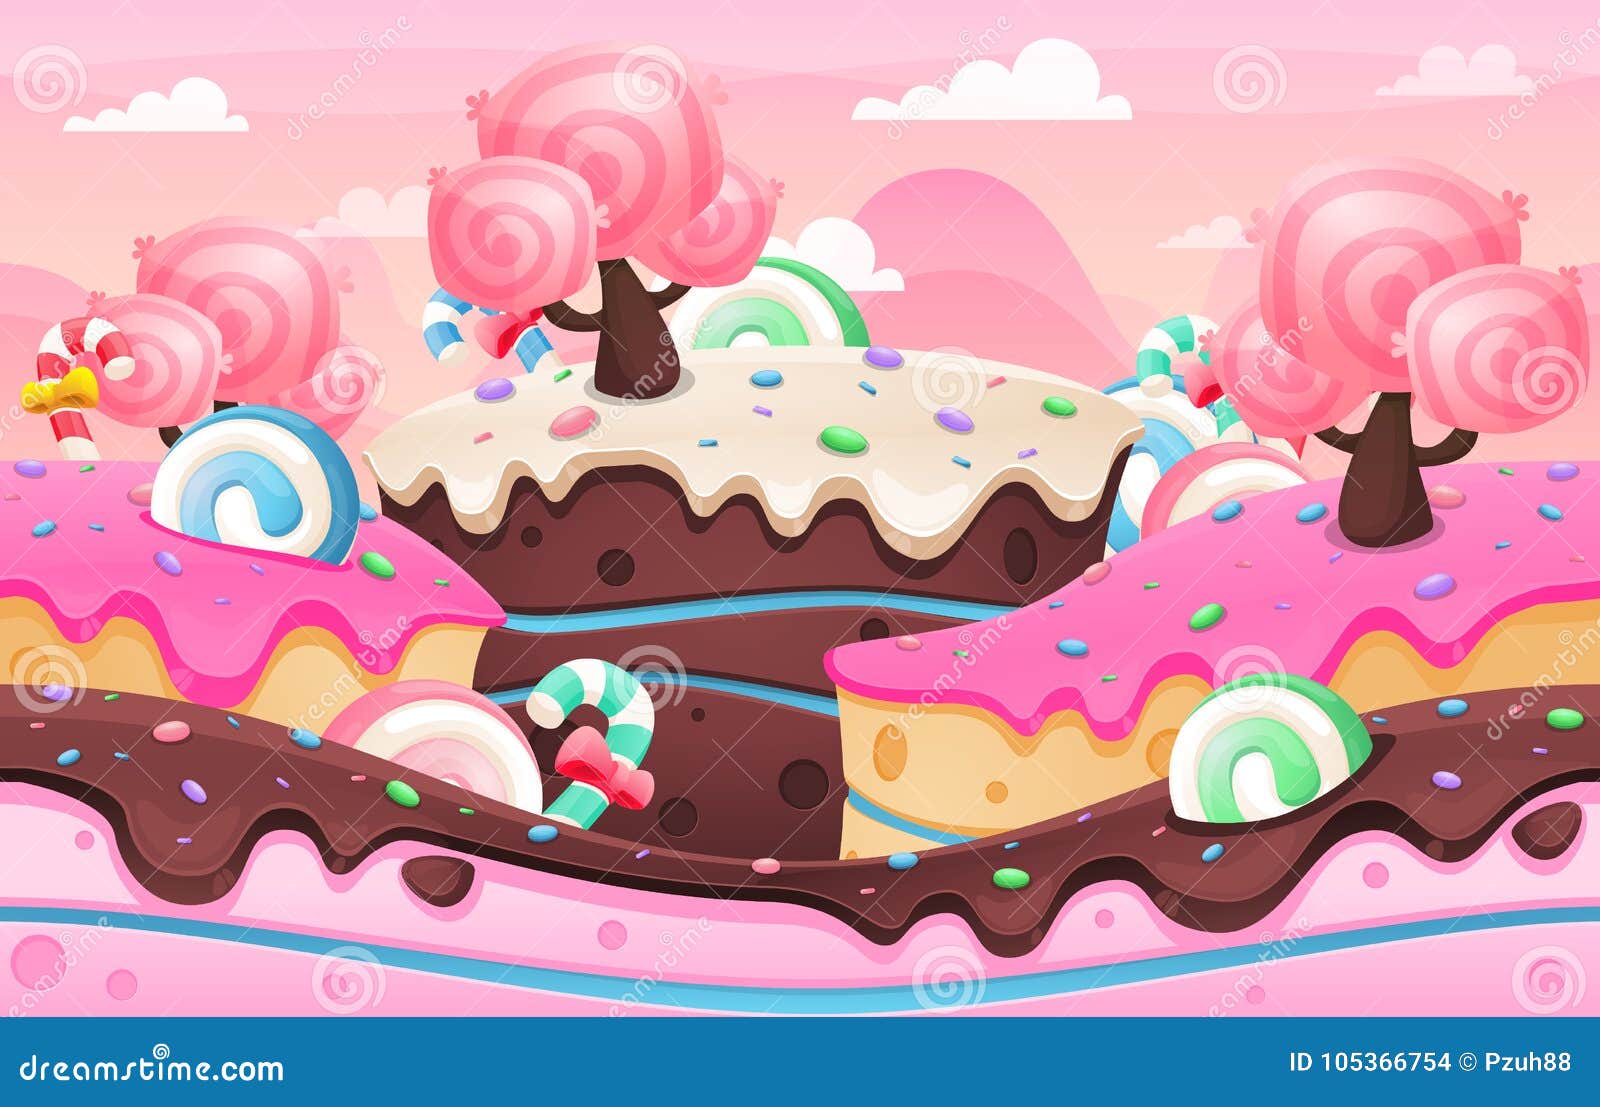 Cakes! | Board Game | BoardGameGeek